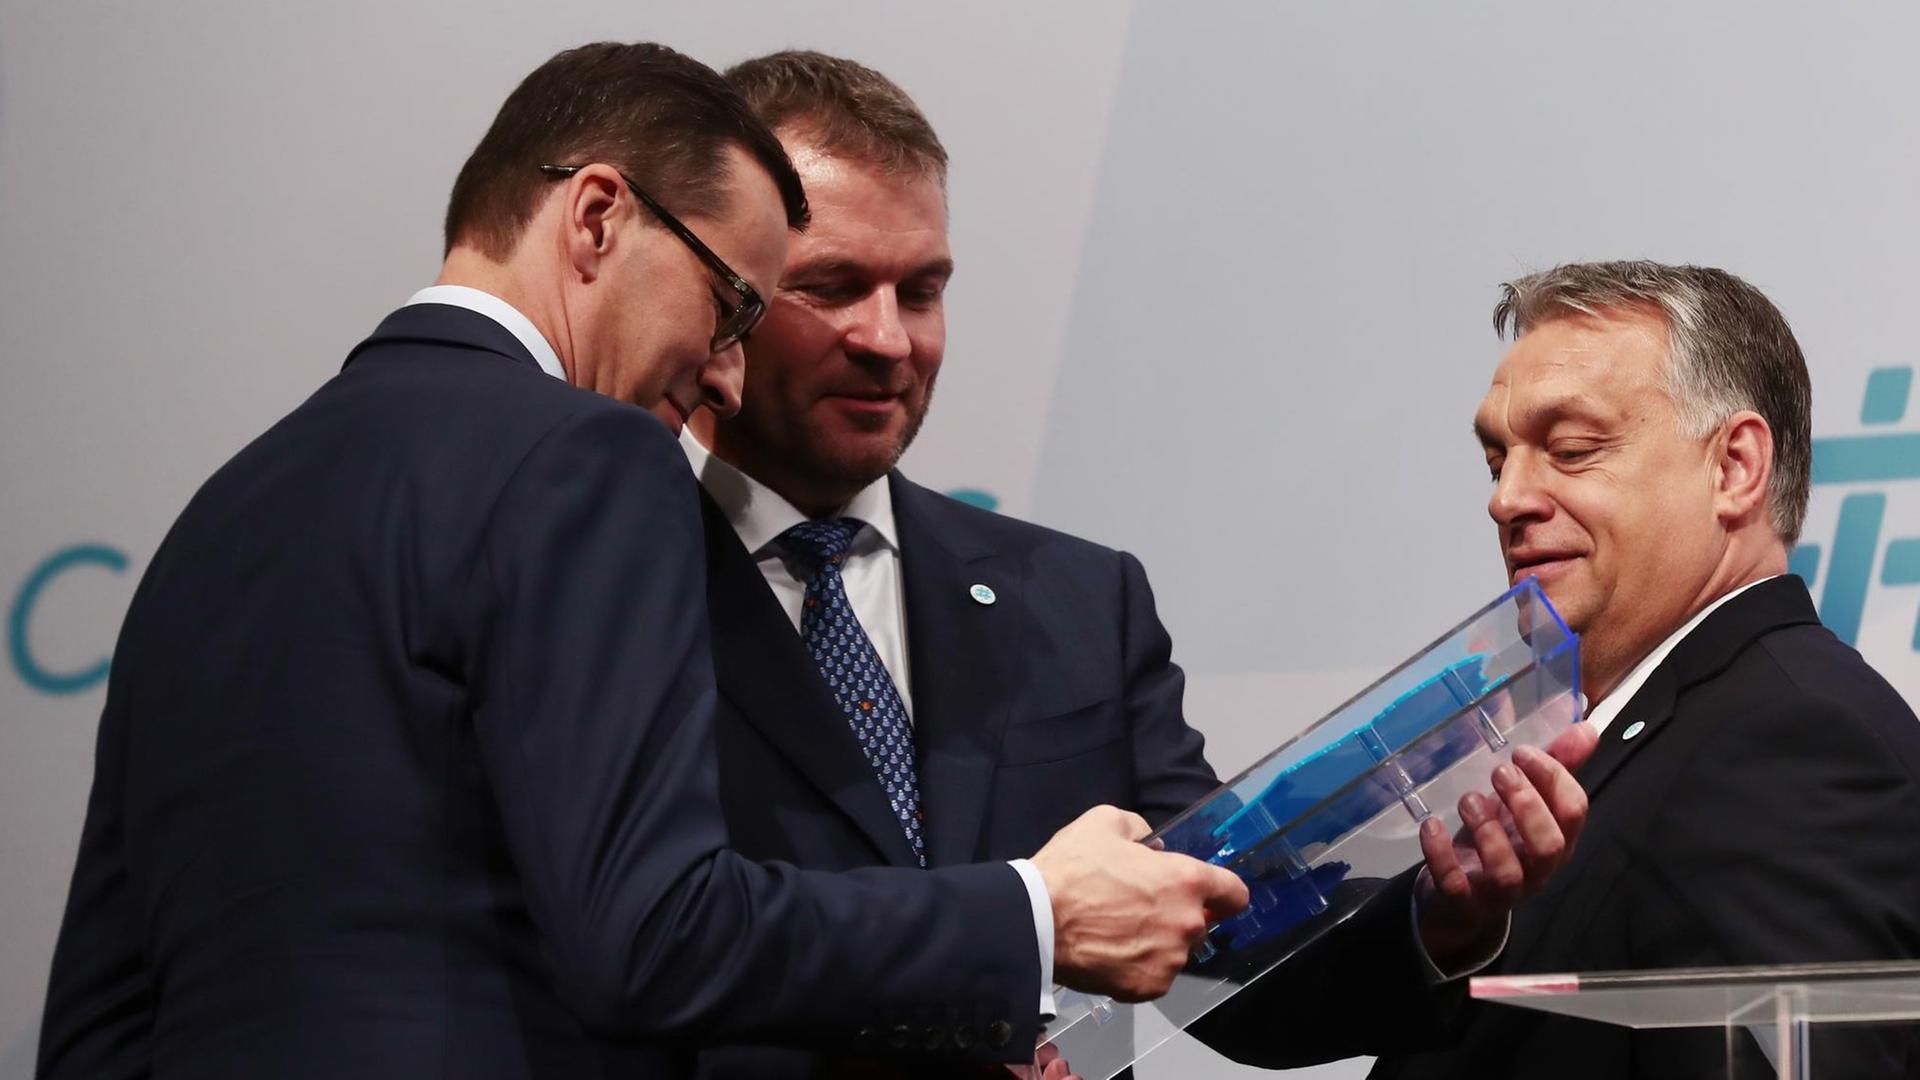 Drei der vier Premierminister der Visegrád-Staaten: Mateusz Morawiecki (Polen), Peter Pellegrini (Slowakei), Viktor Orban (Ungarn) am 21. Juni 2018 in Budapest